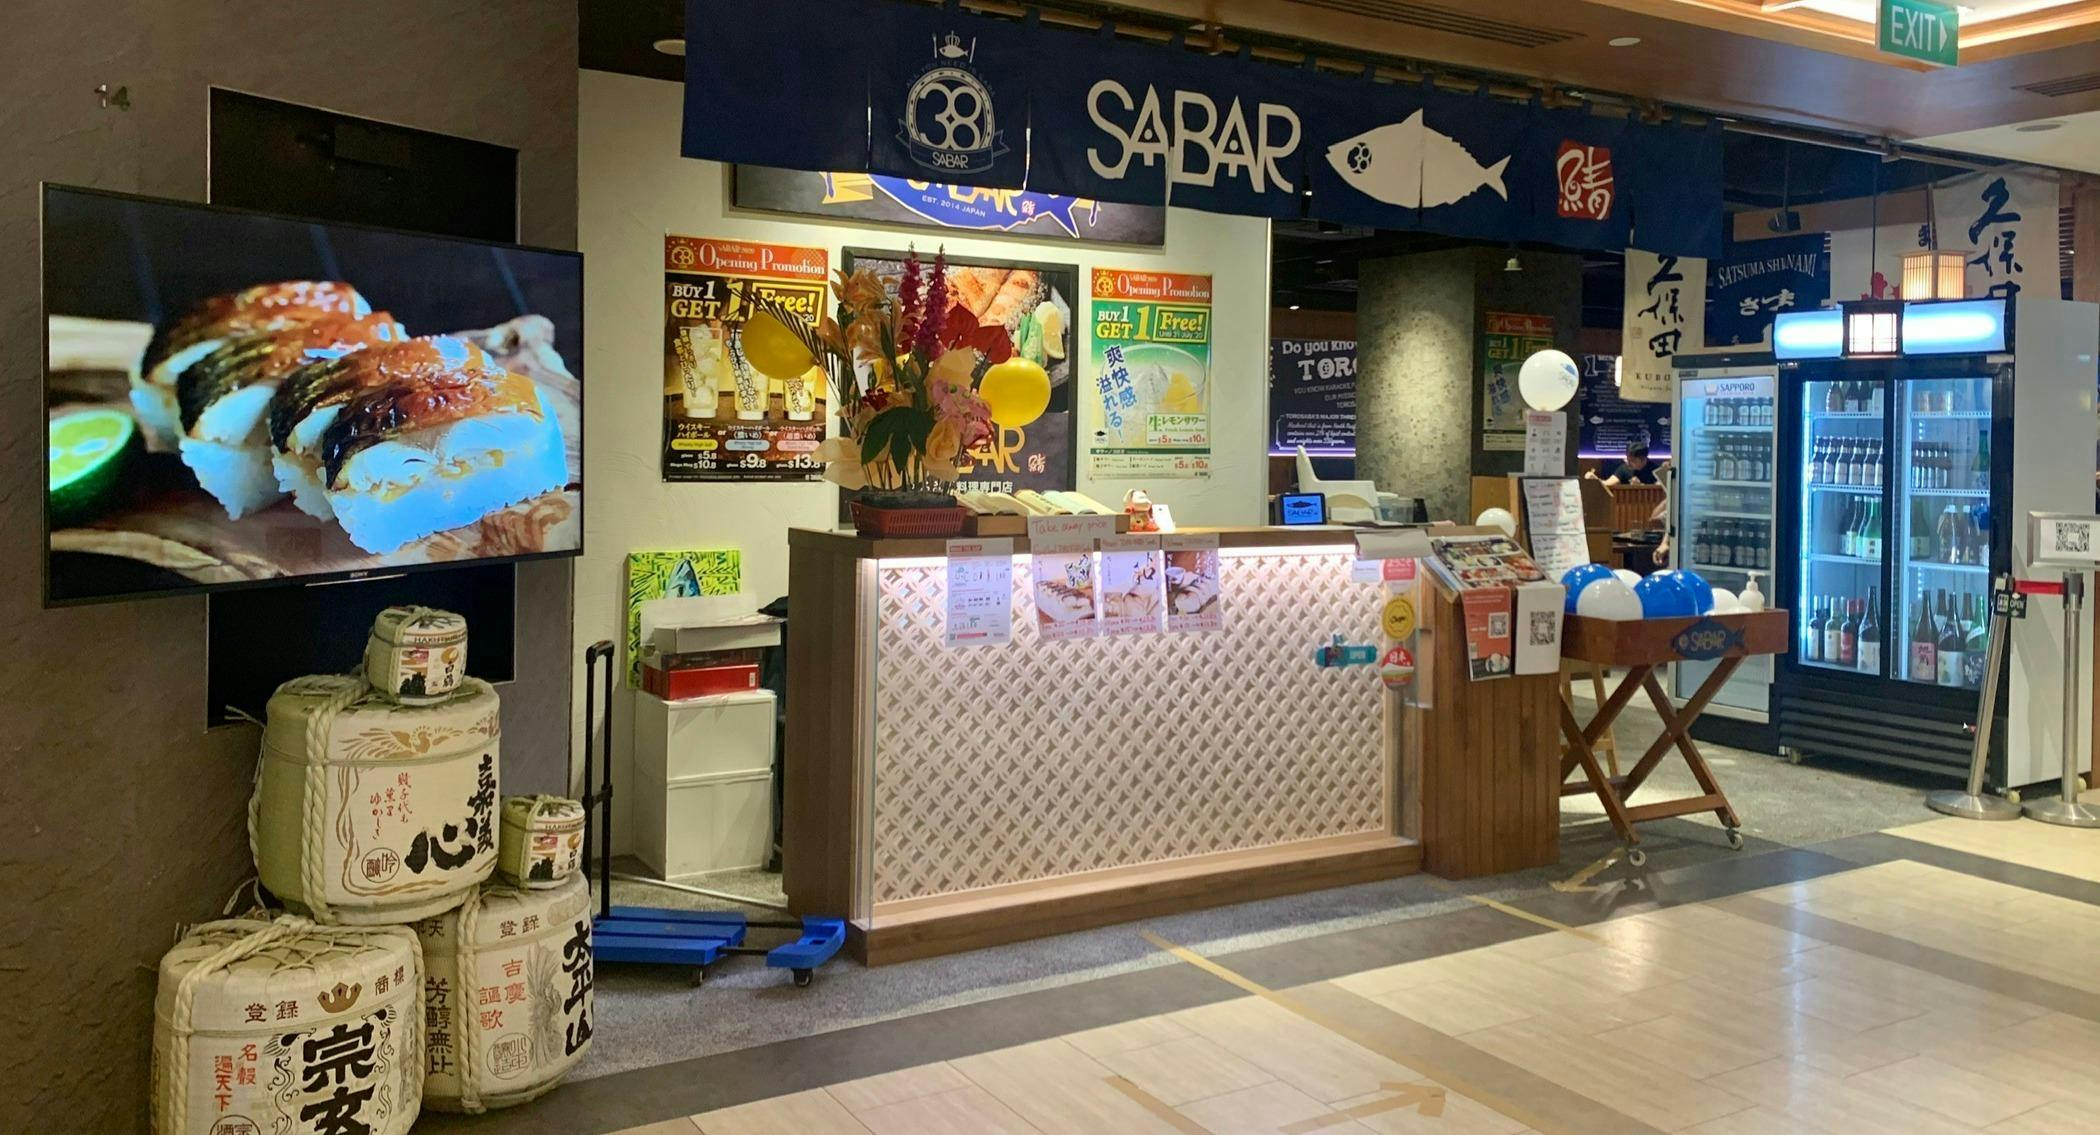 Photo of restaurant Sabar - 100AM in Tanjong Pagar, Singapore